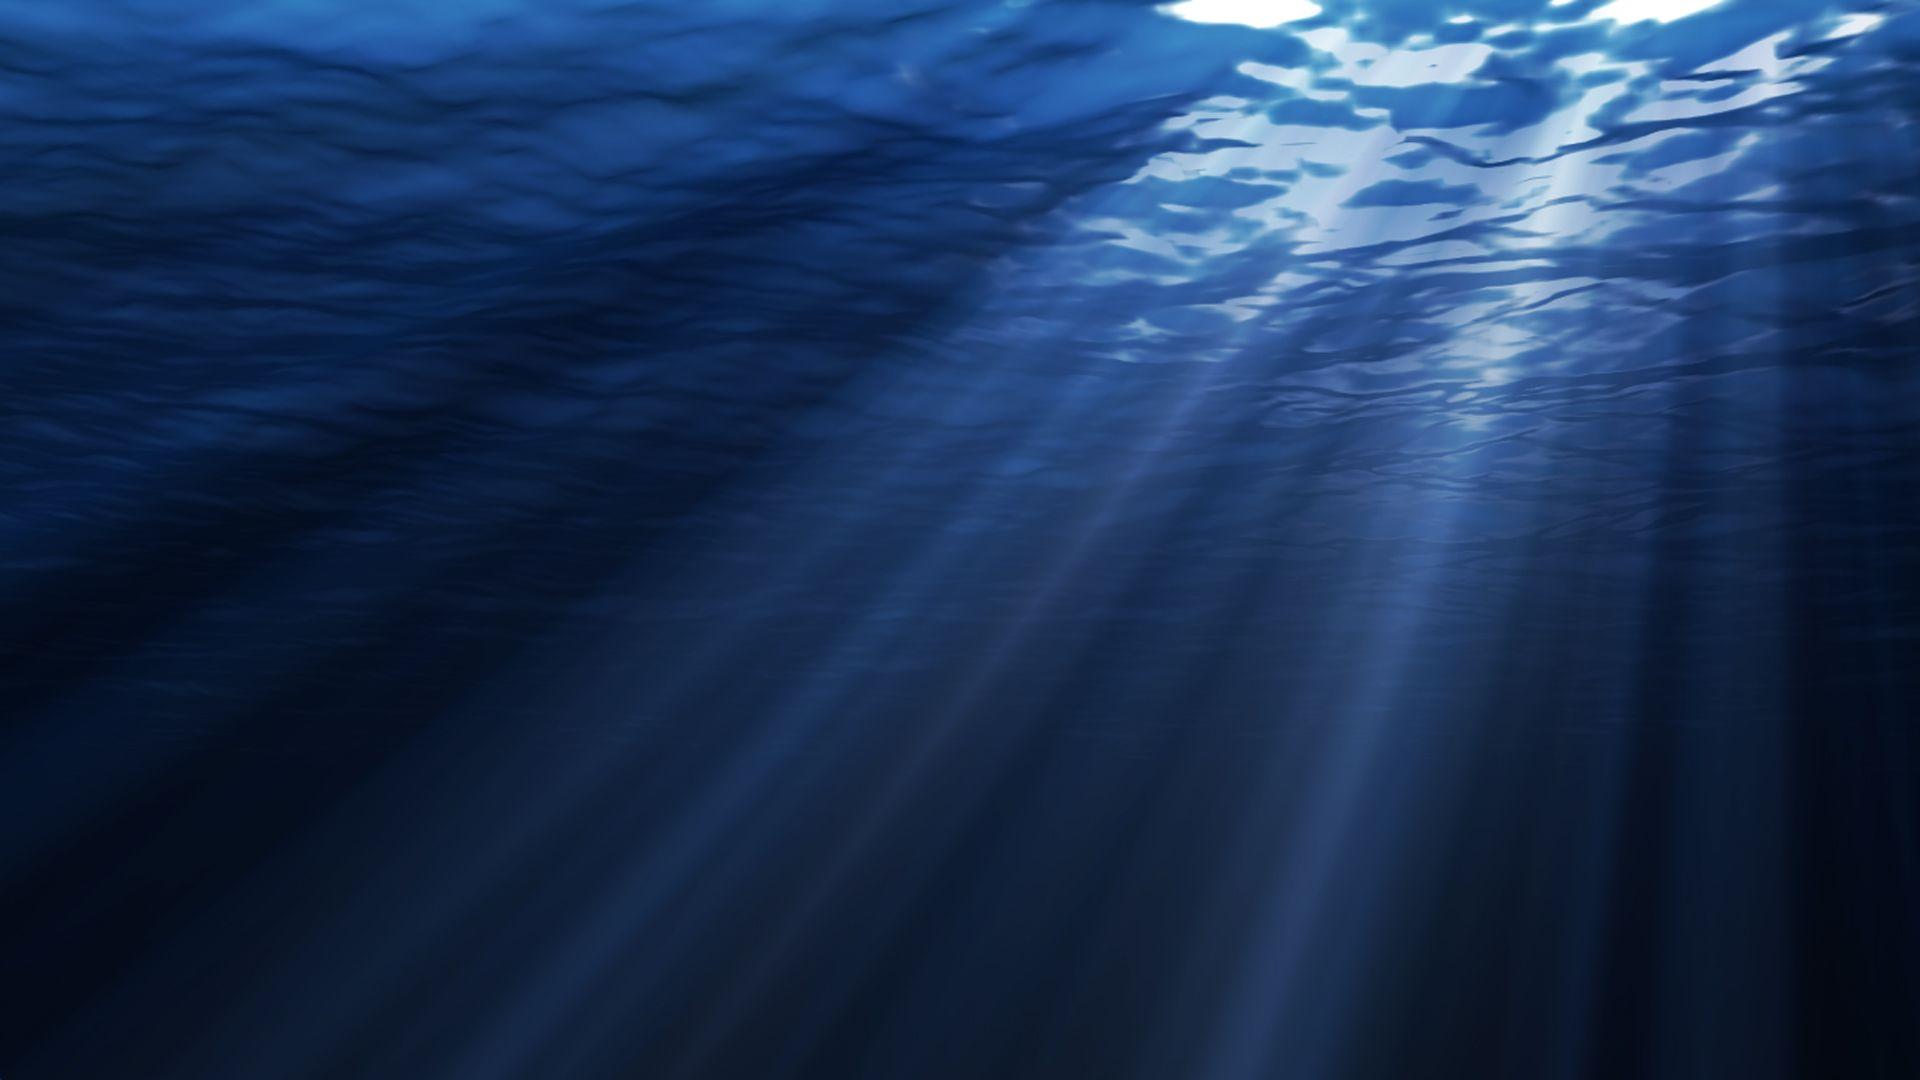 Solar Reflection Underwater image